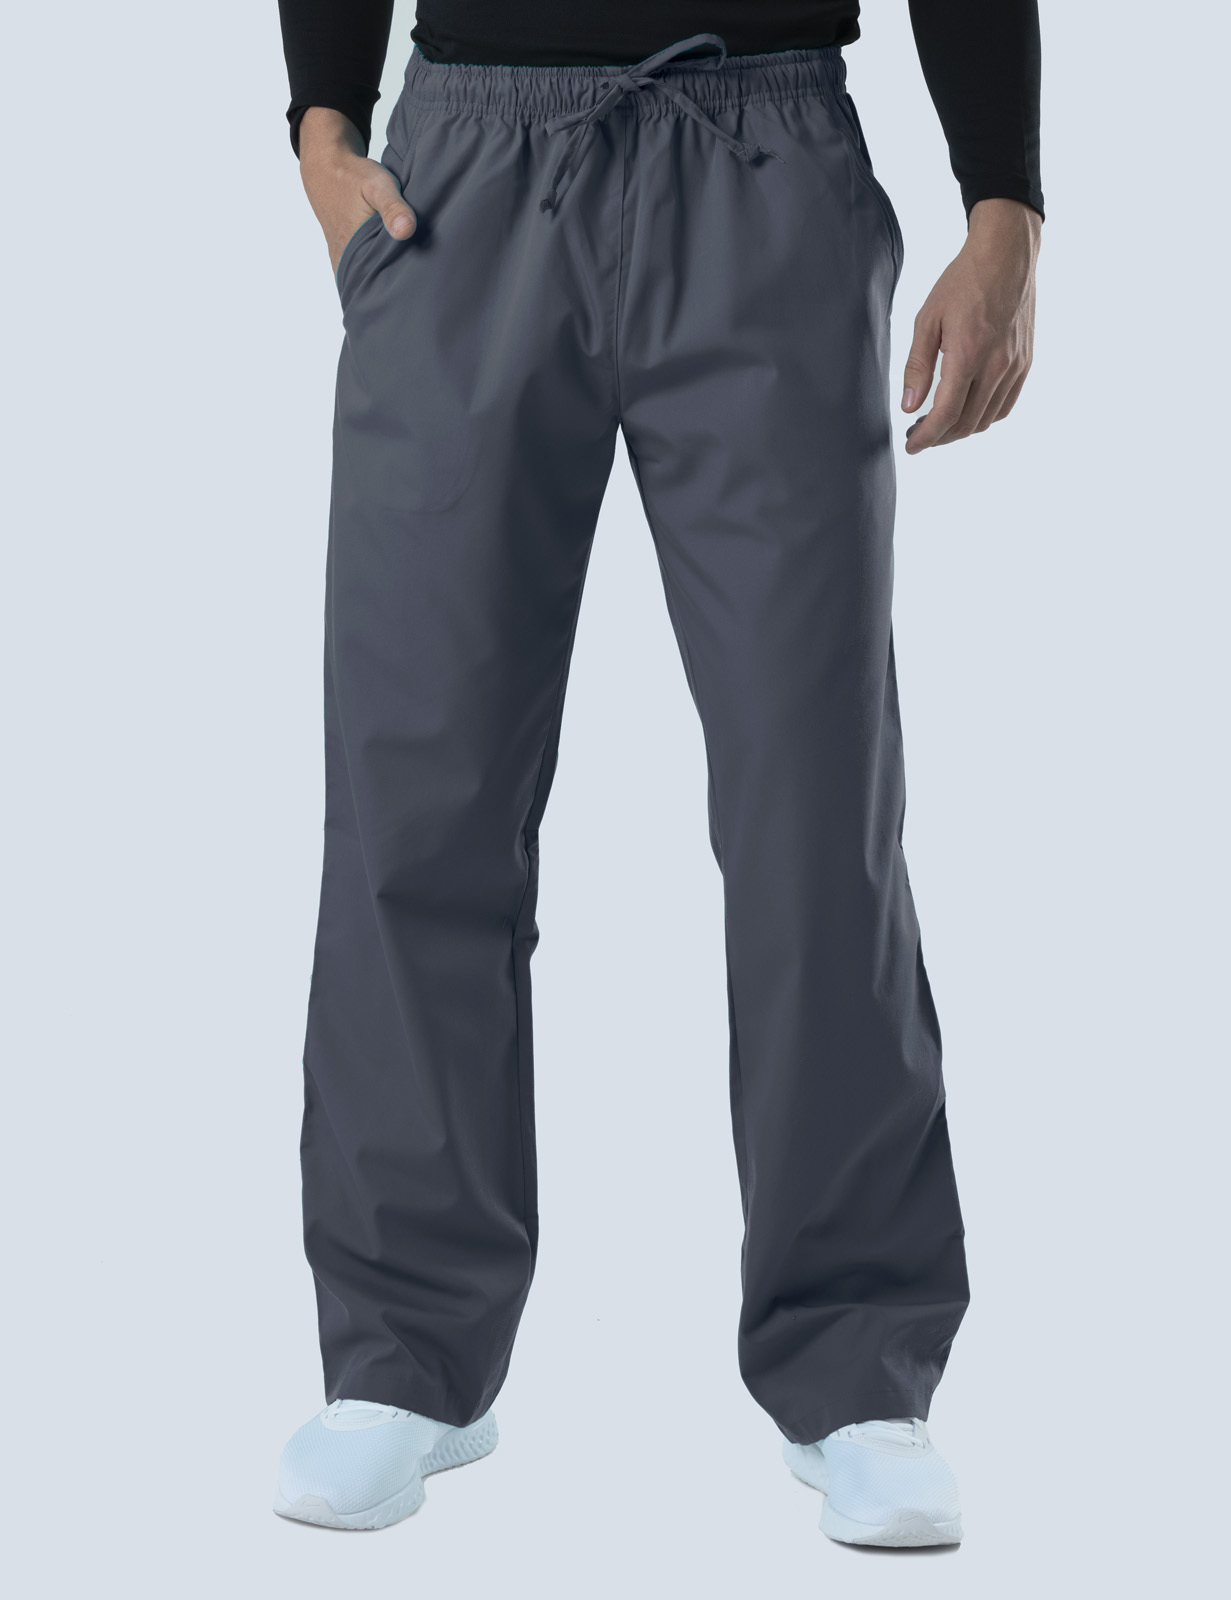 Men's Regular Cut Pants - Steel Grey - 3X Large - Tall